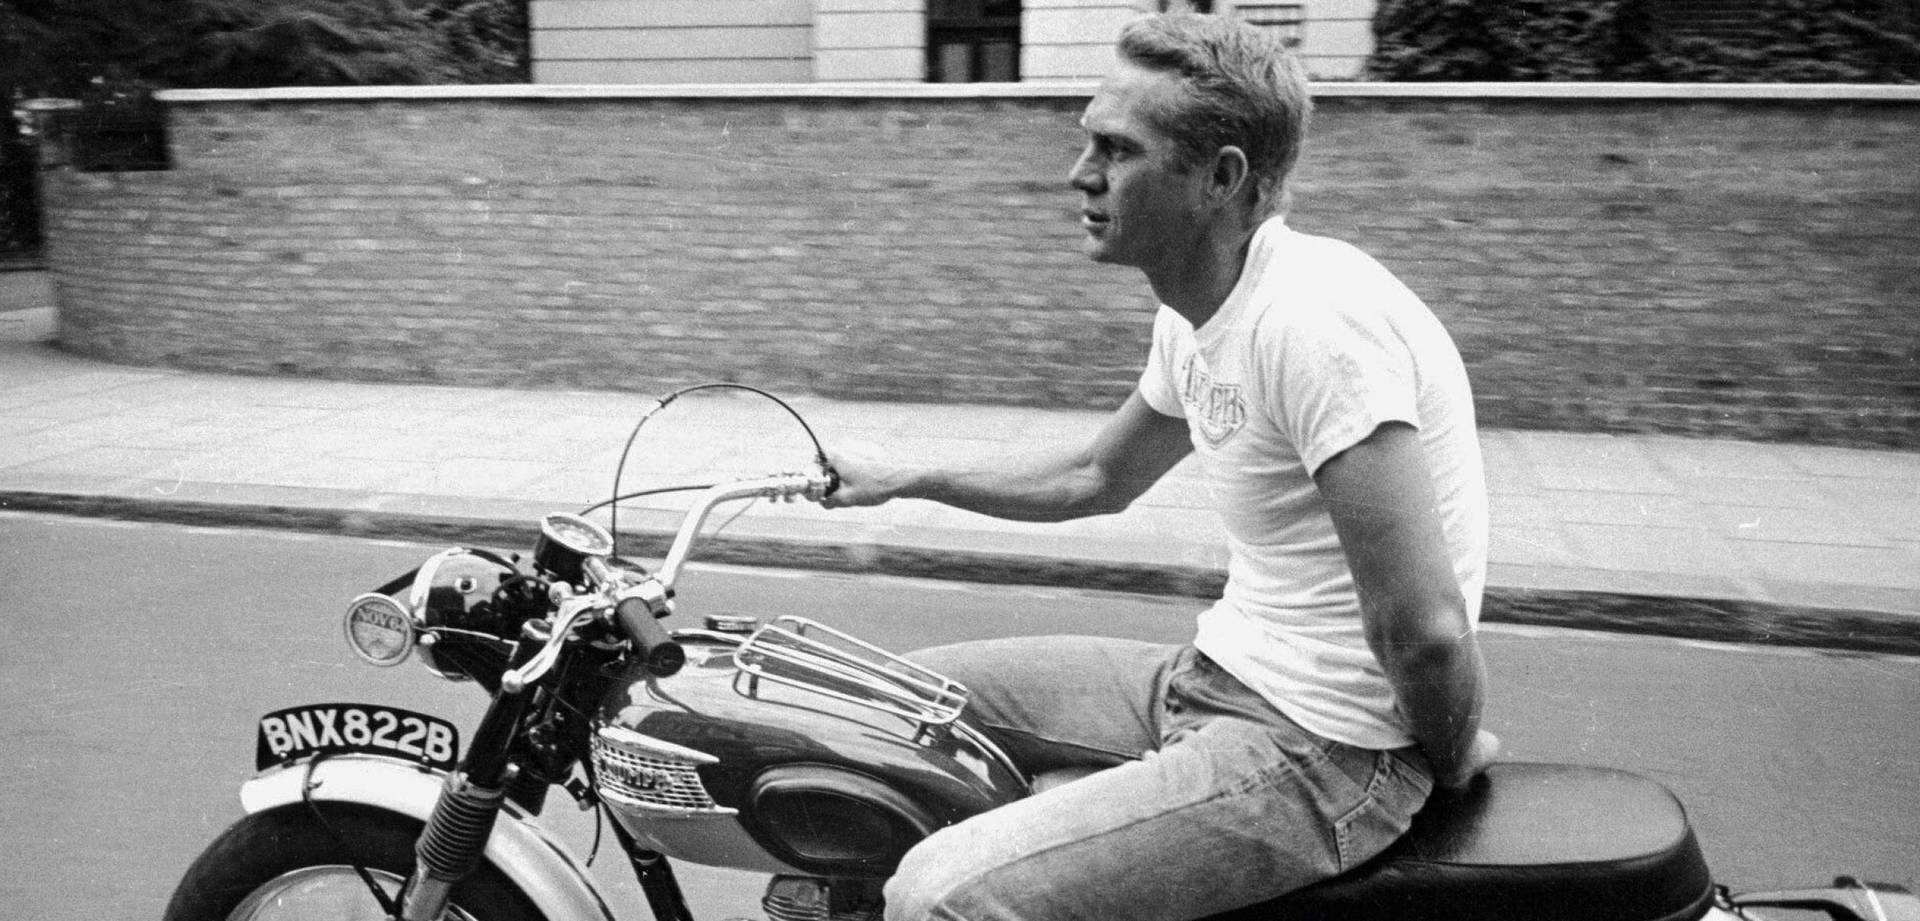 Steve McQueen Riding Triumph Motorcycle Wallpaper